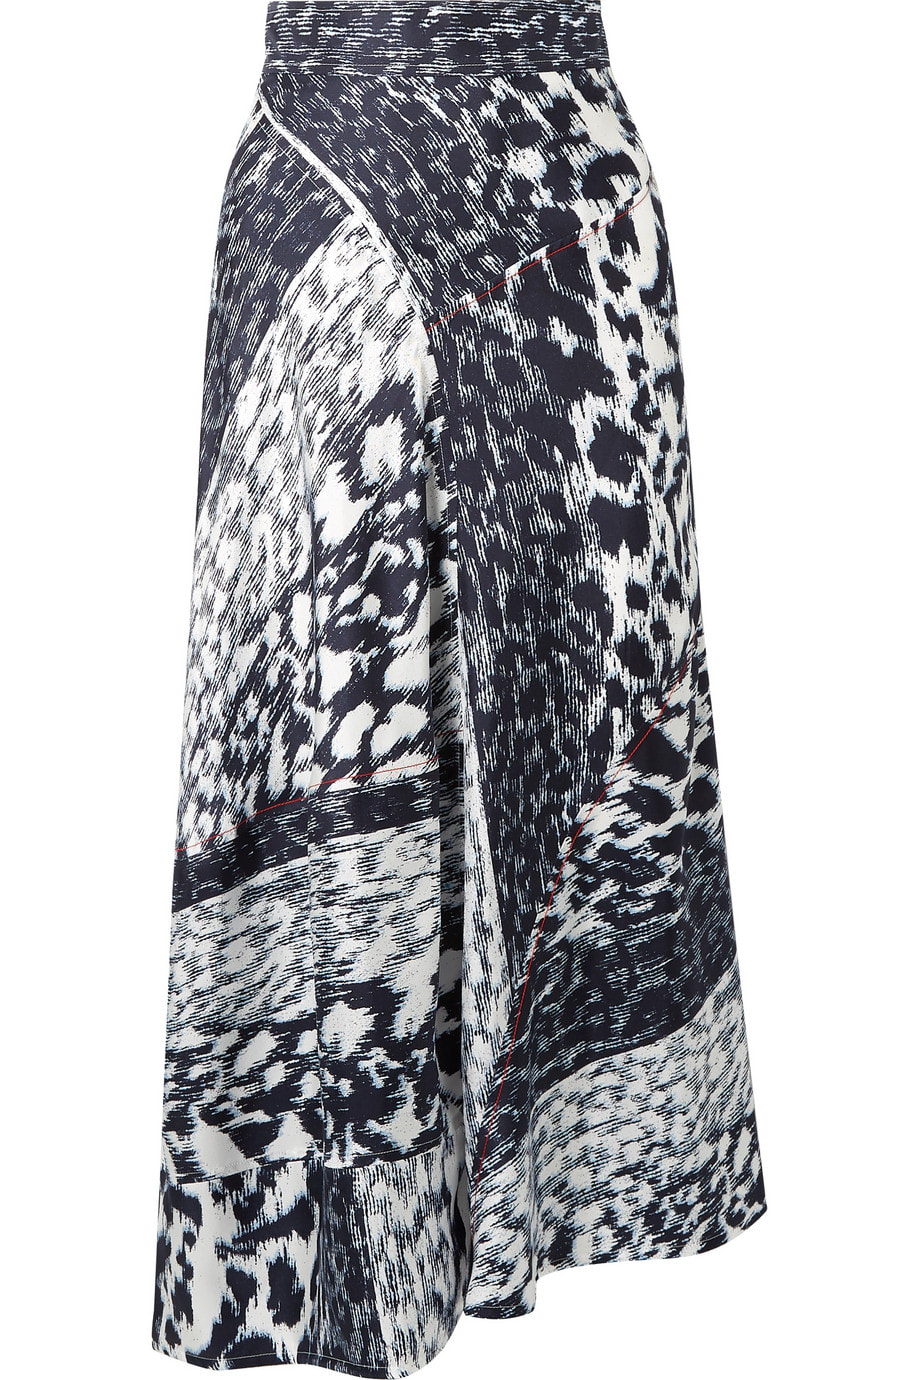 Victoria Beckham leopard silk midi skirt